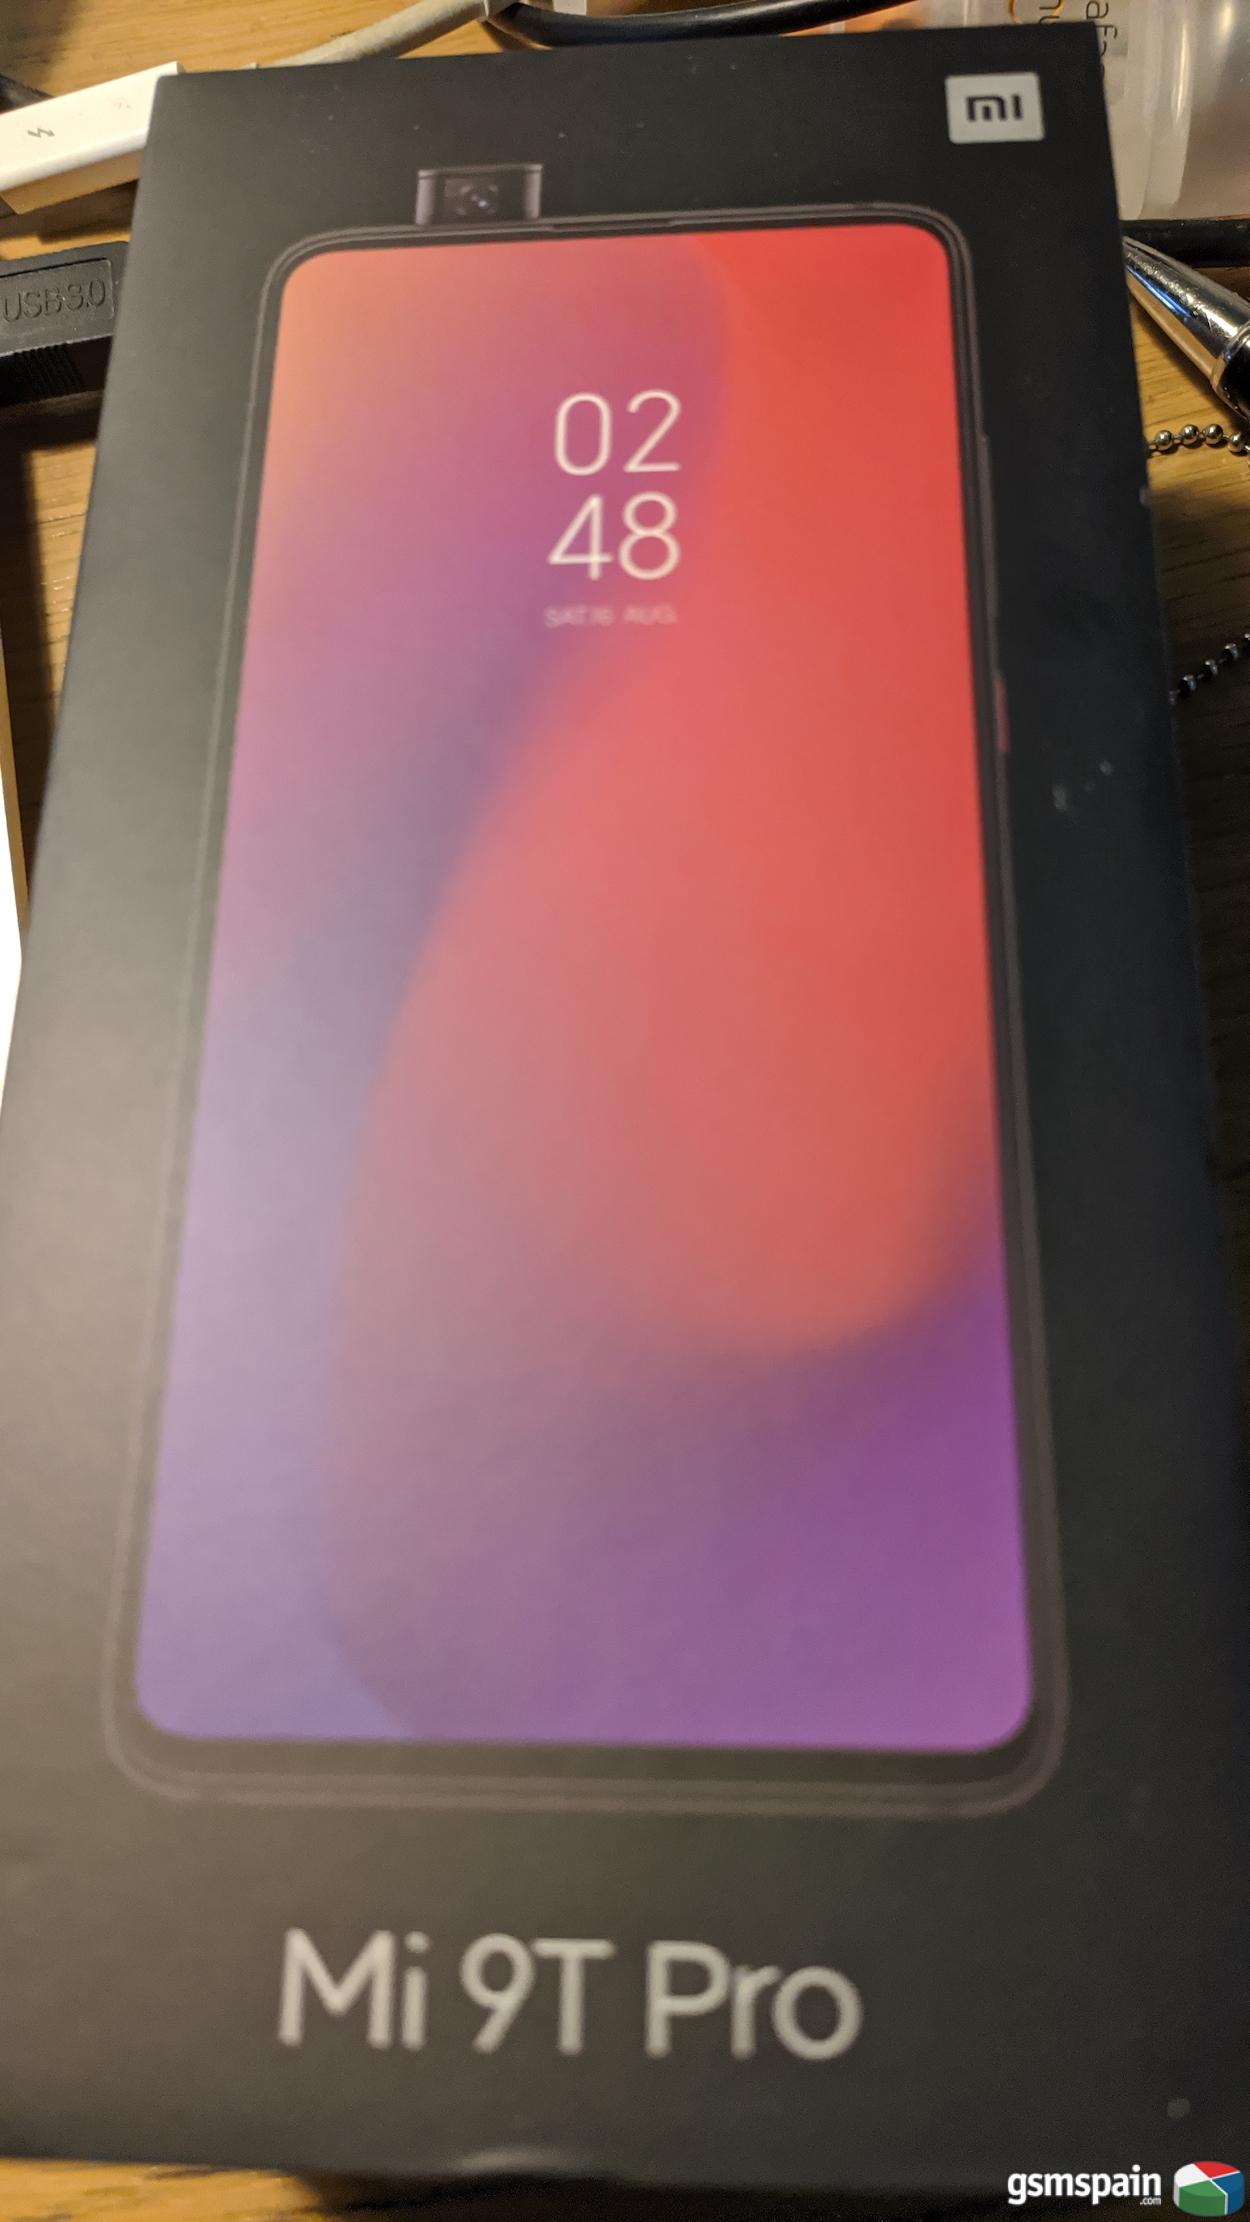 [VENDO] Xiaomi MI 9T pro 128gb como nuevo